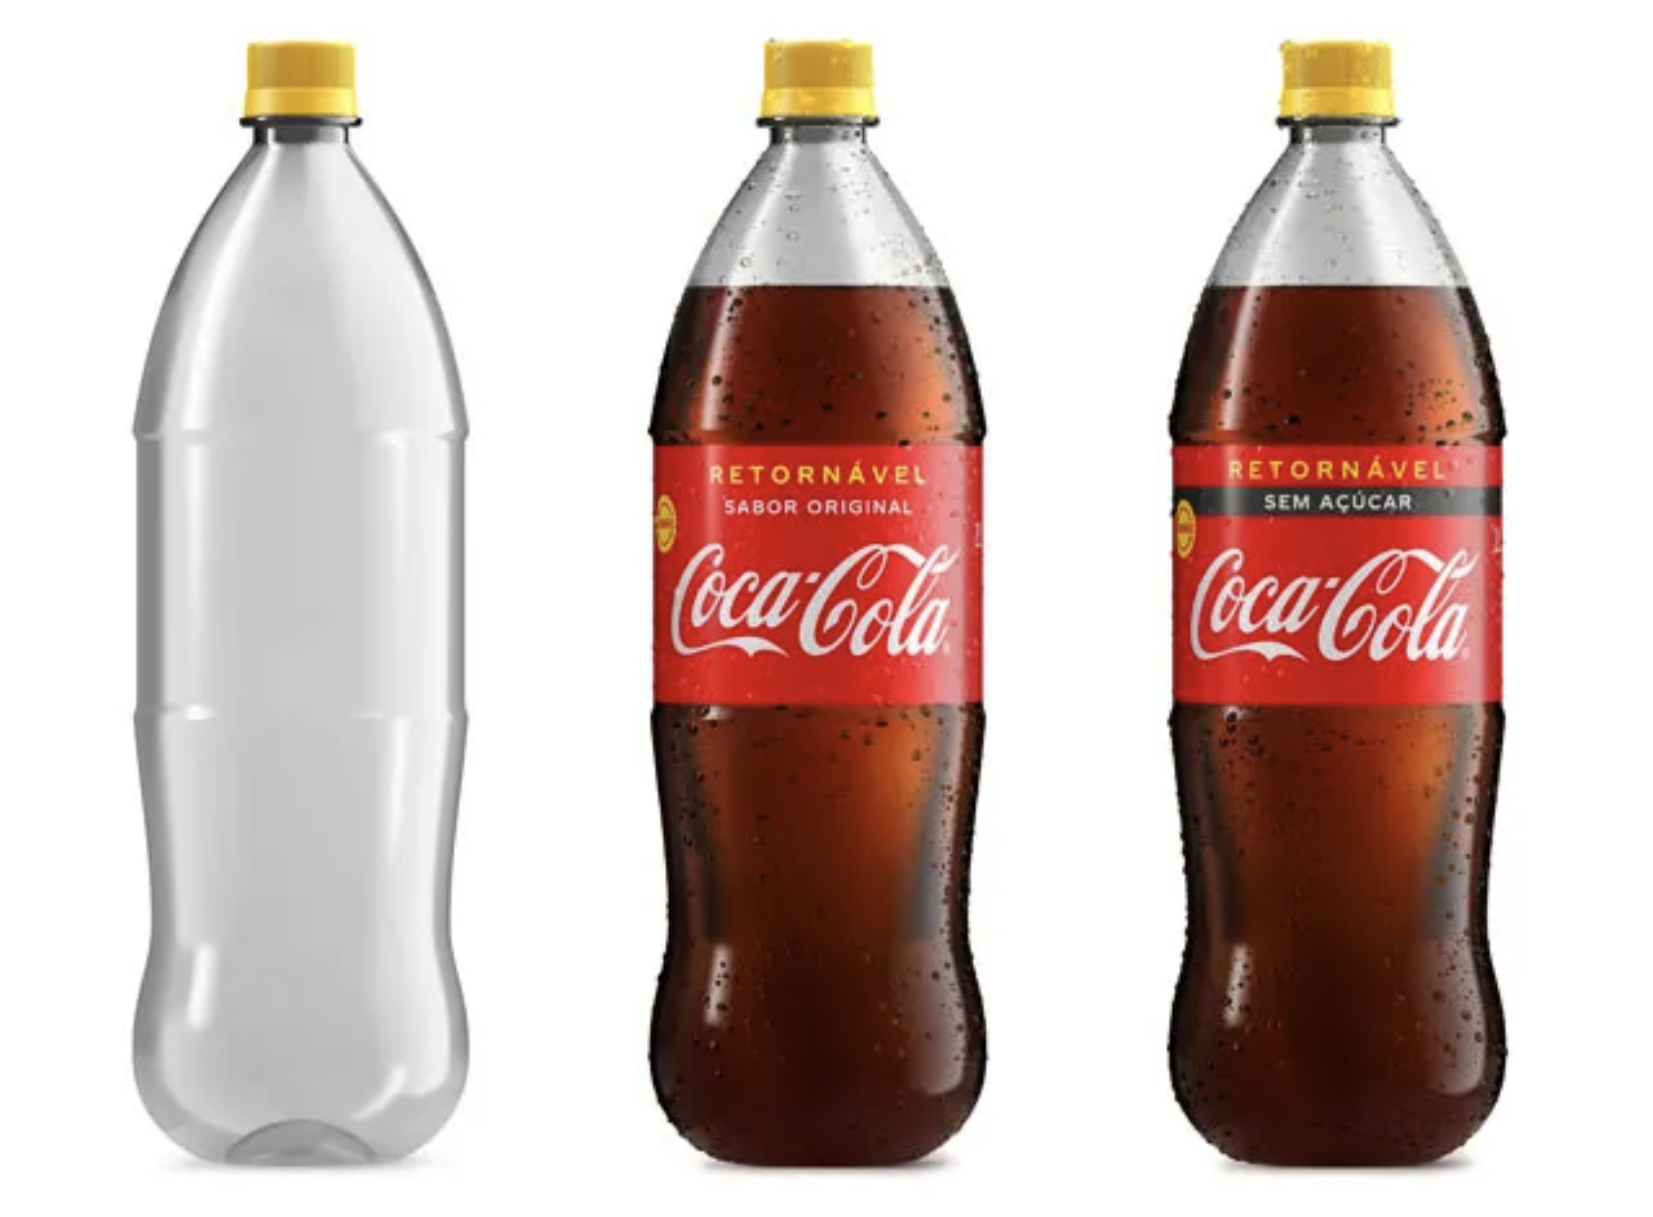 refillable bottles for Coca-Cola Brazil